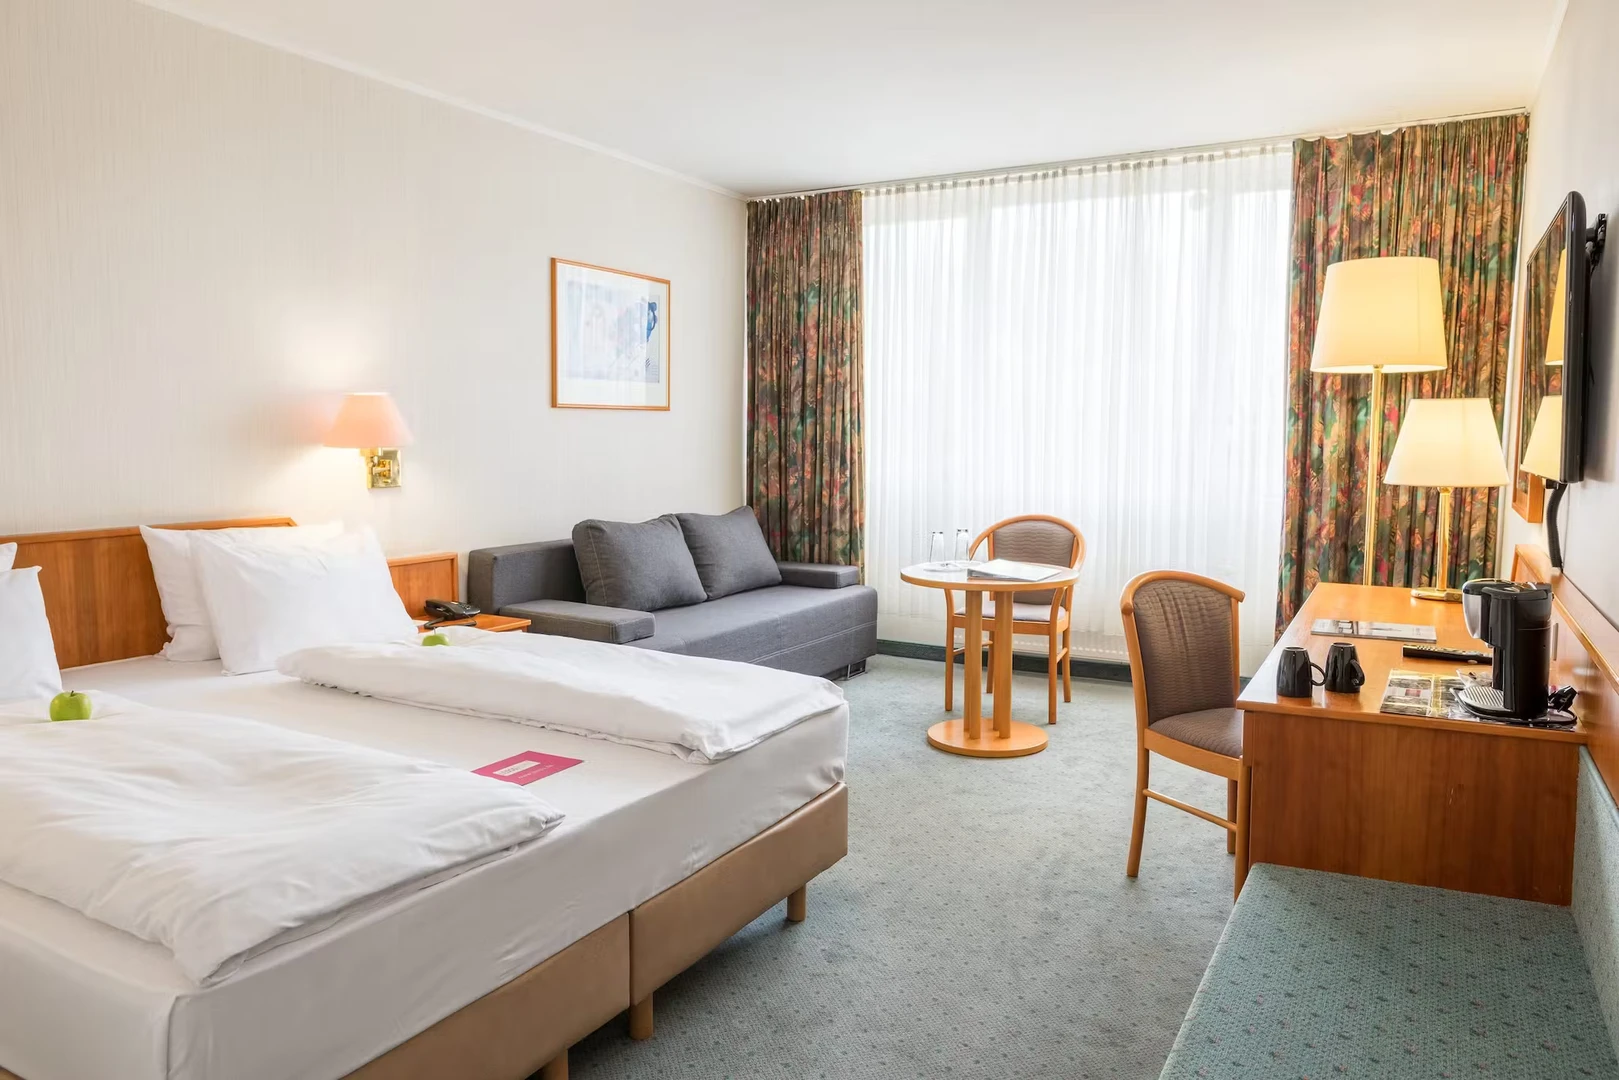 Two bedroom accommodation in Leverkusen